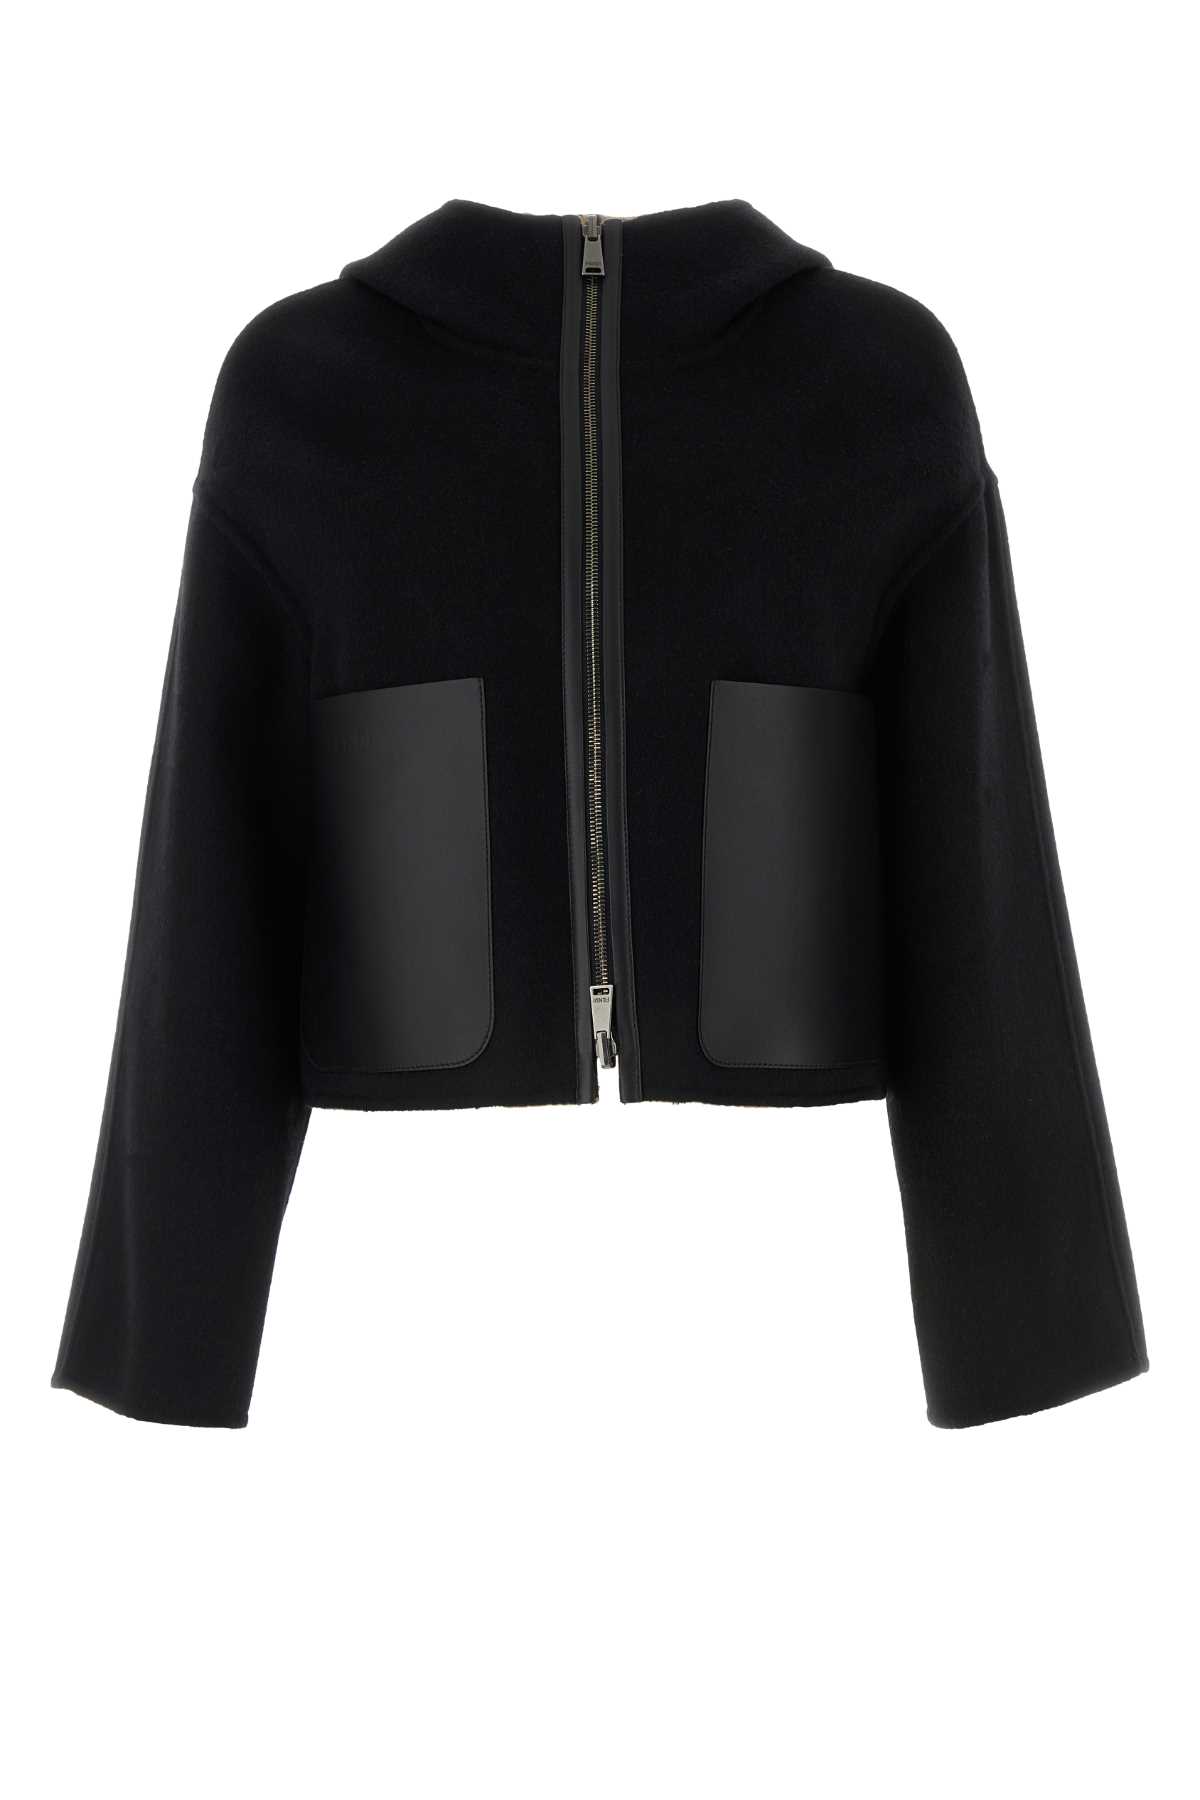 Fendi Black Wool Blend Reversible Jacket